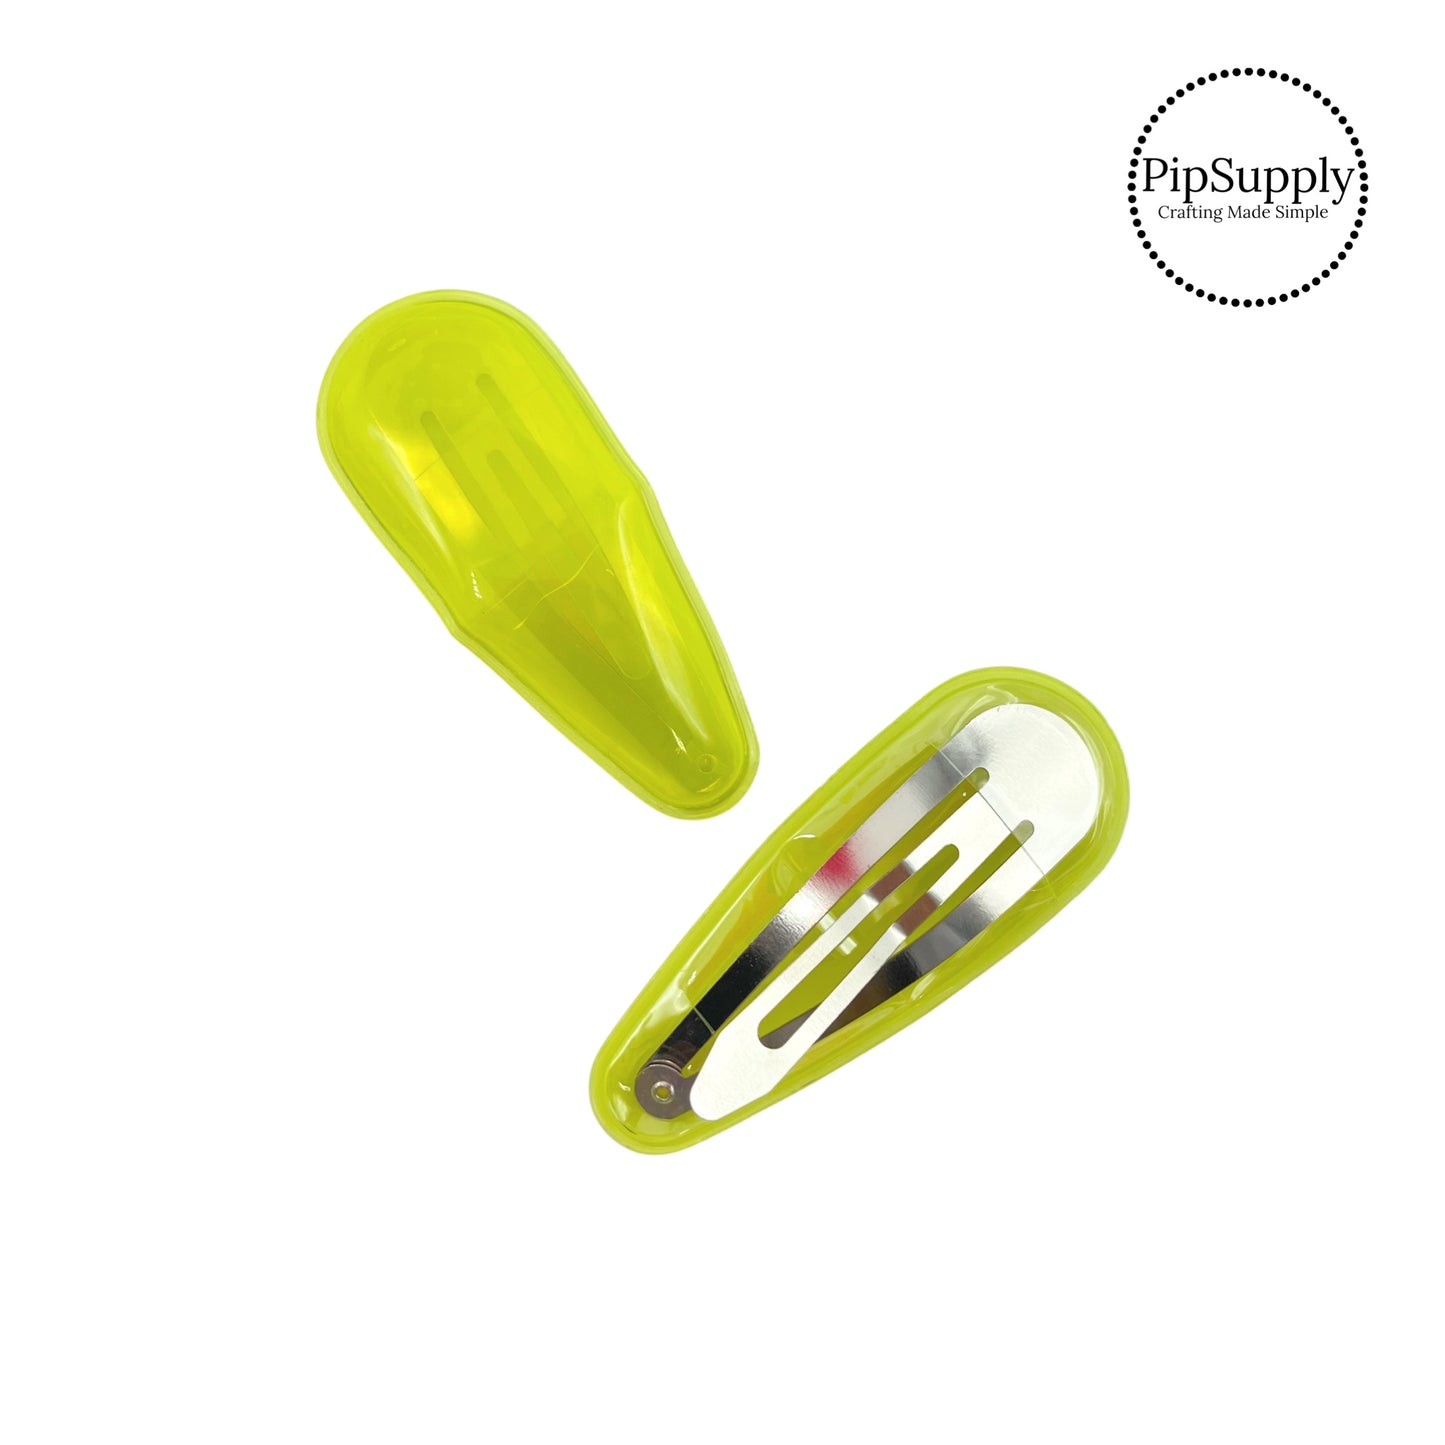 Flexible shaker bright yellow jelly hair clip